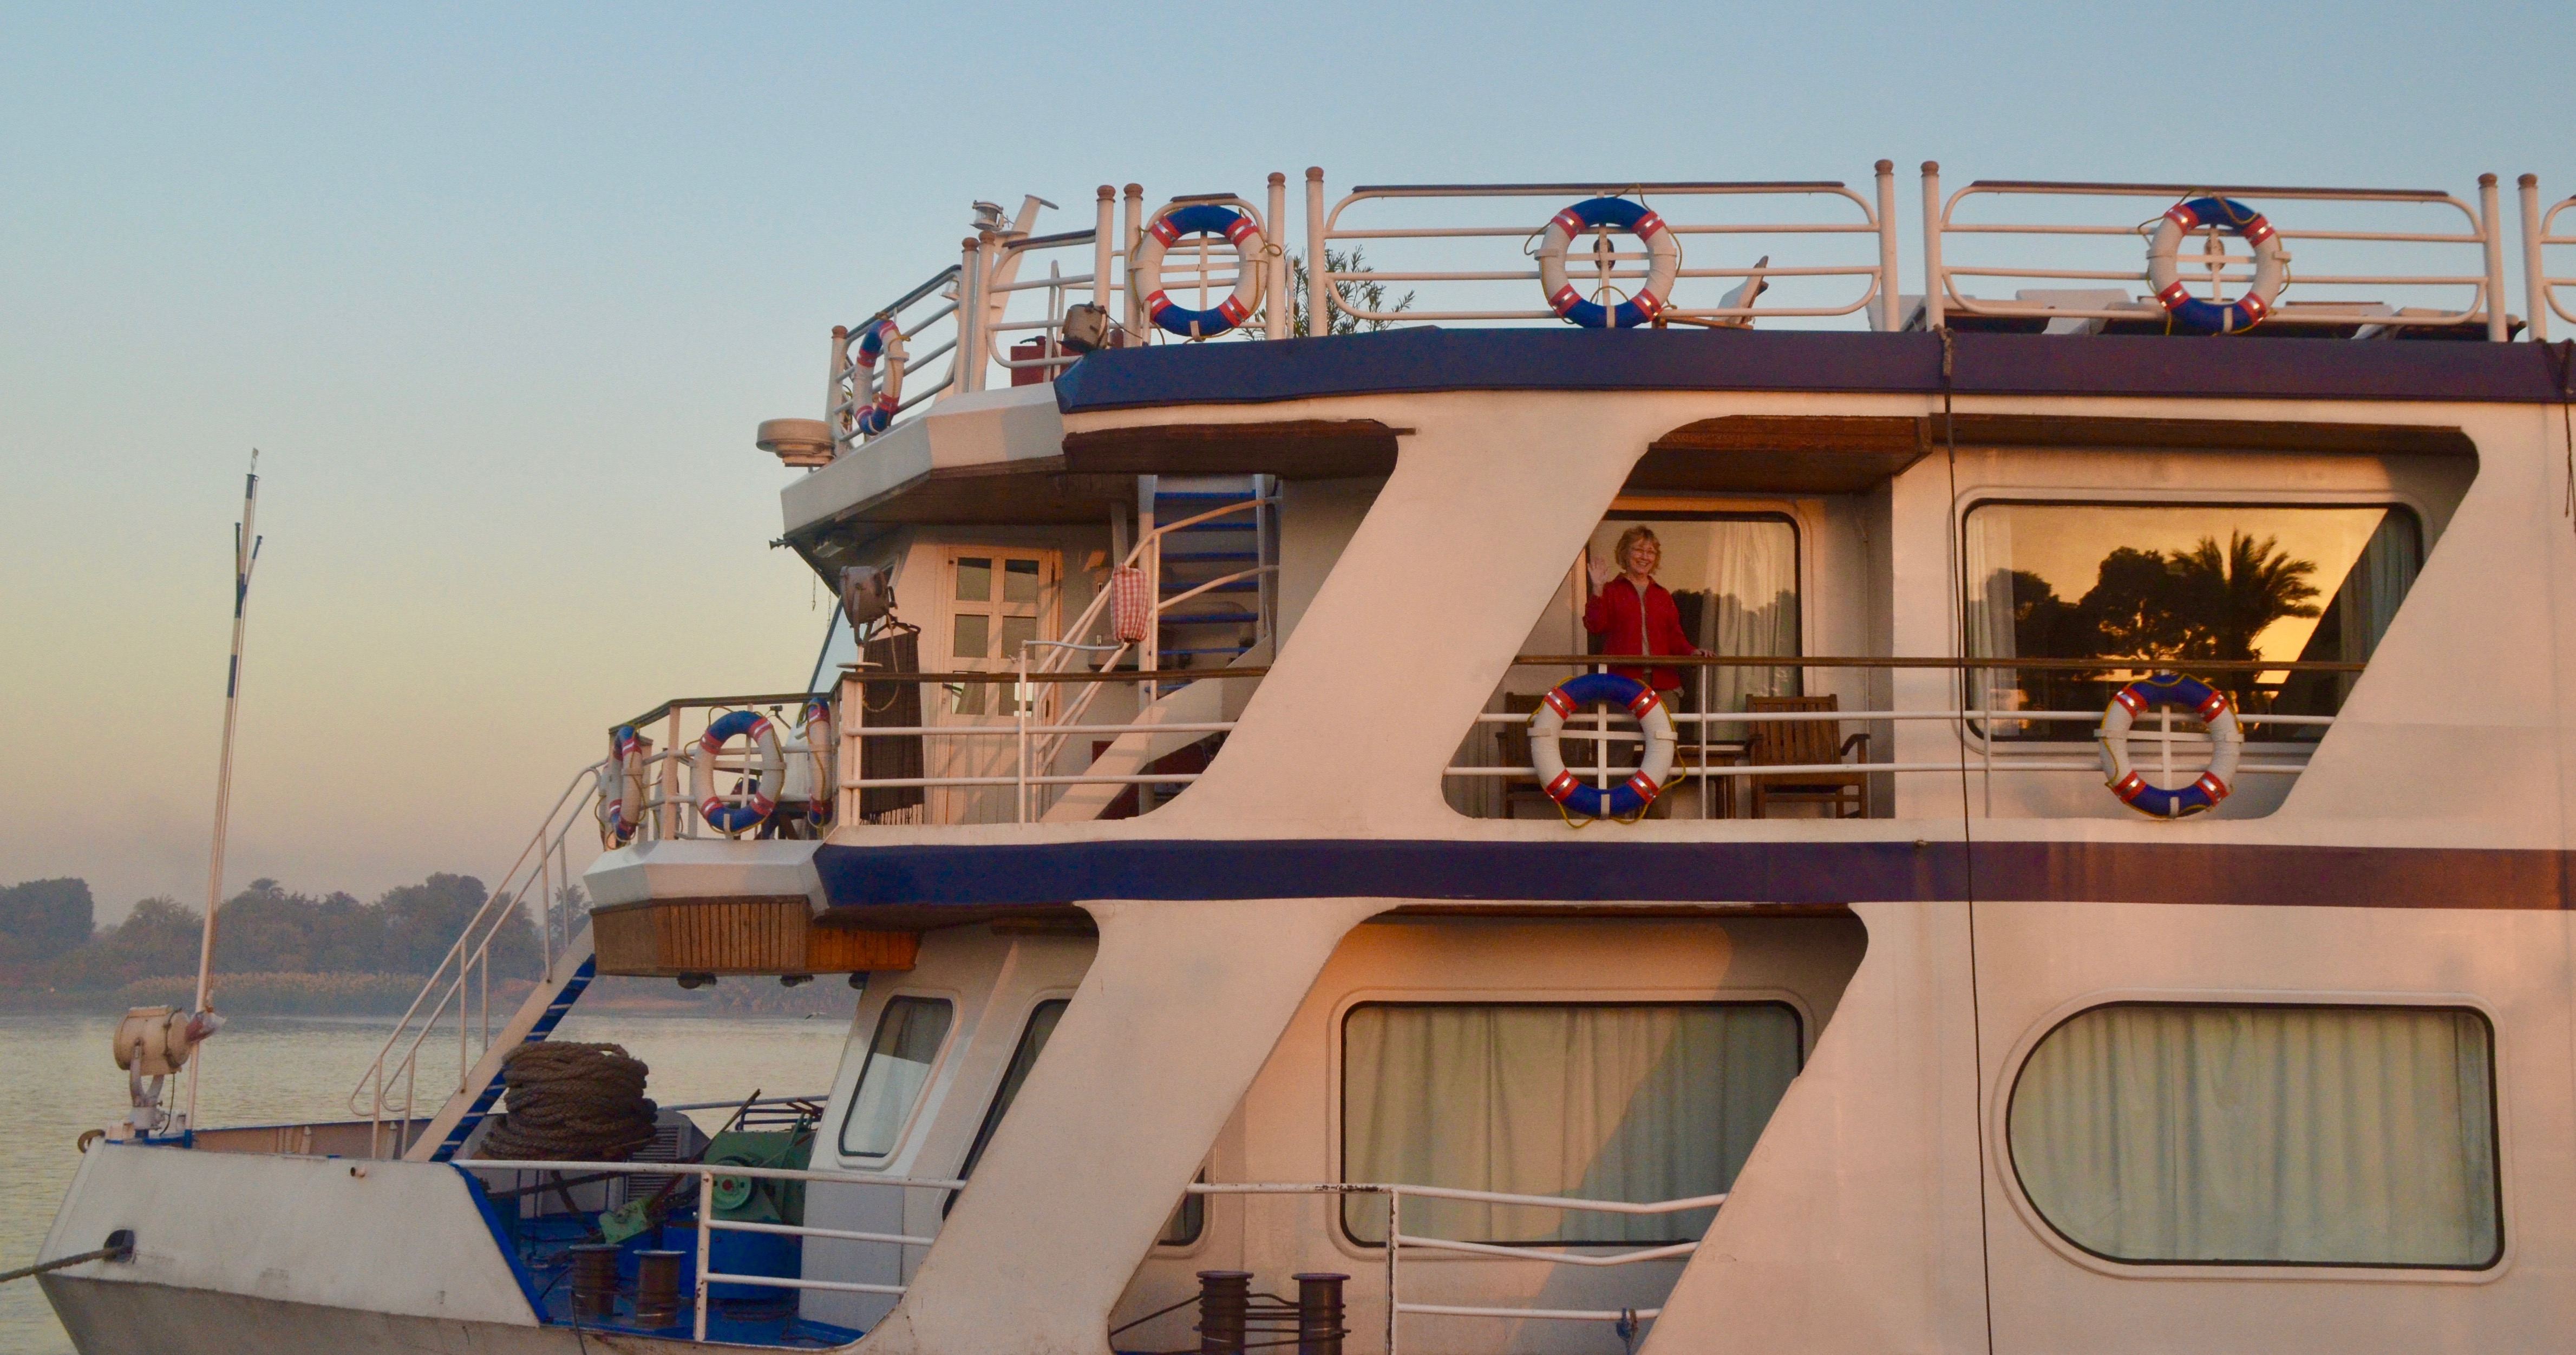 Rixos radamis blue planet отзывы. Radamis II Nile Cruise. Cruise Concerto 2 Nile. Sanctuary Sun Boat IV Nile Cruise Cabin. Корабль 5* Standard – m/s radamis.